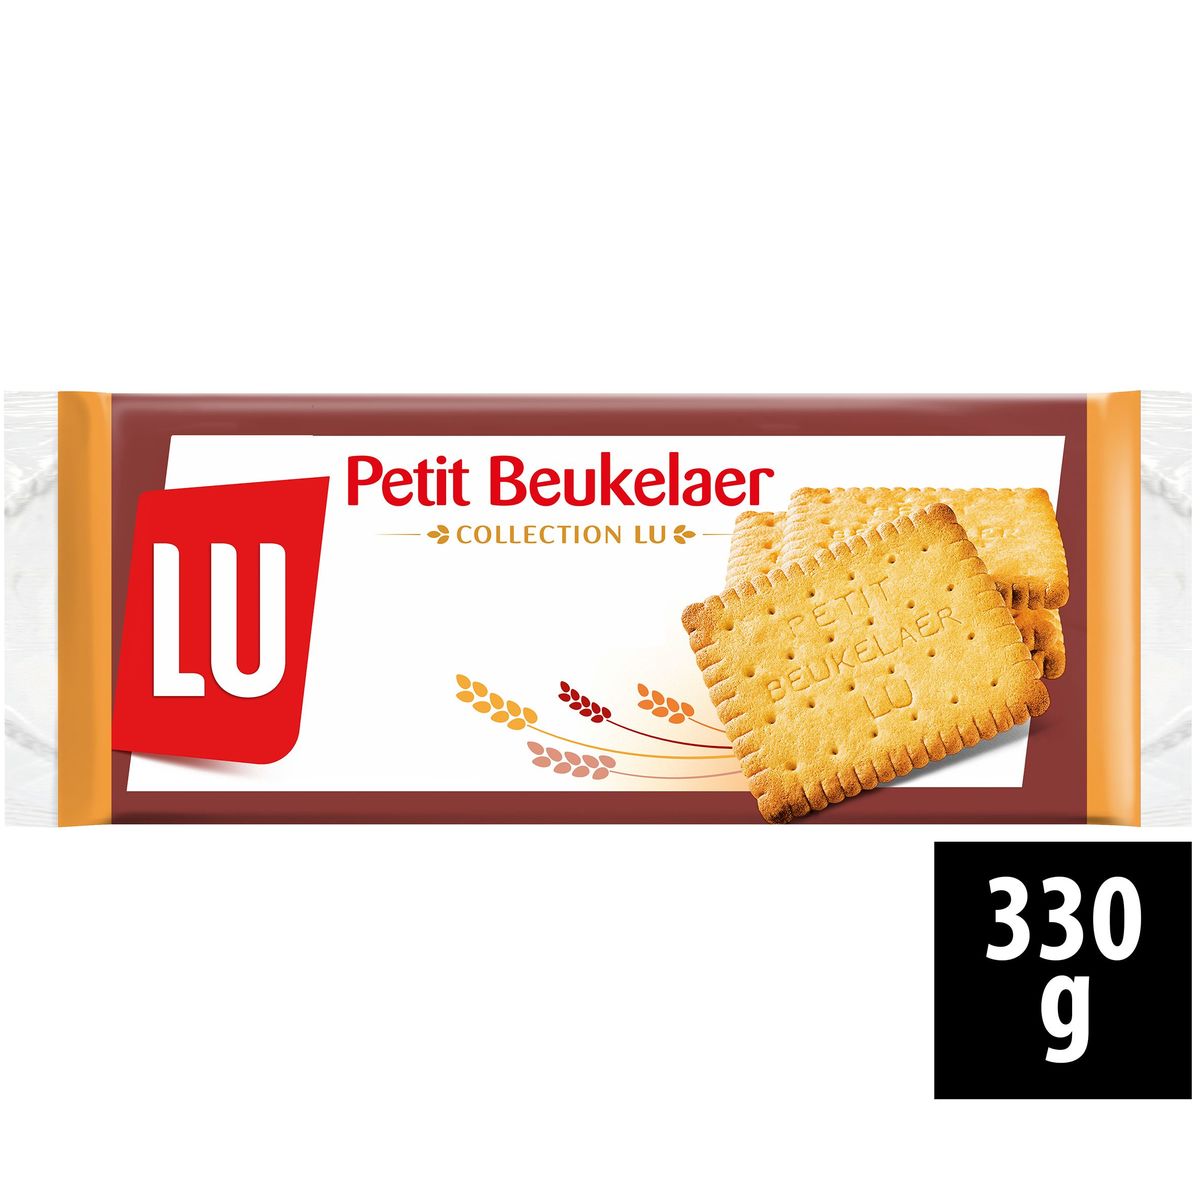 LU Petit Beukelaer Koeken 330 g